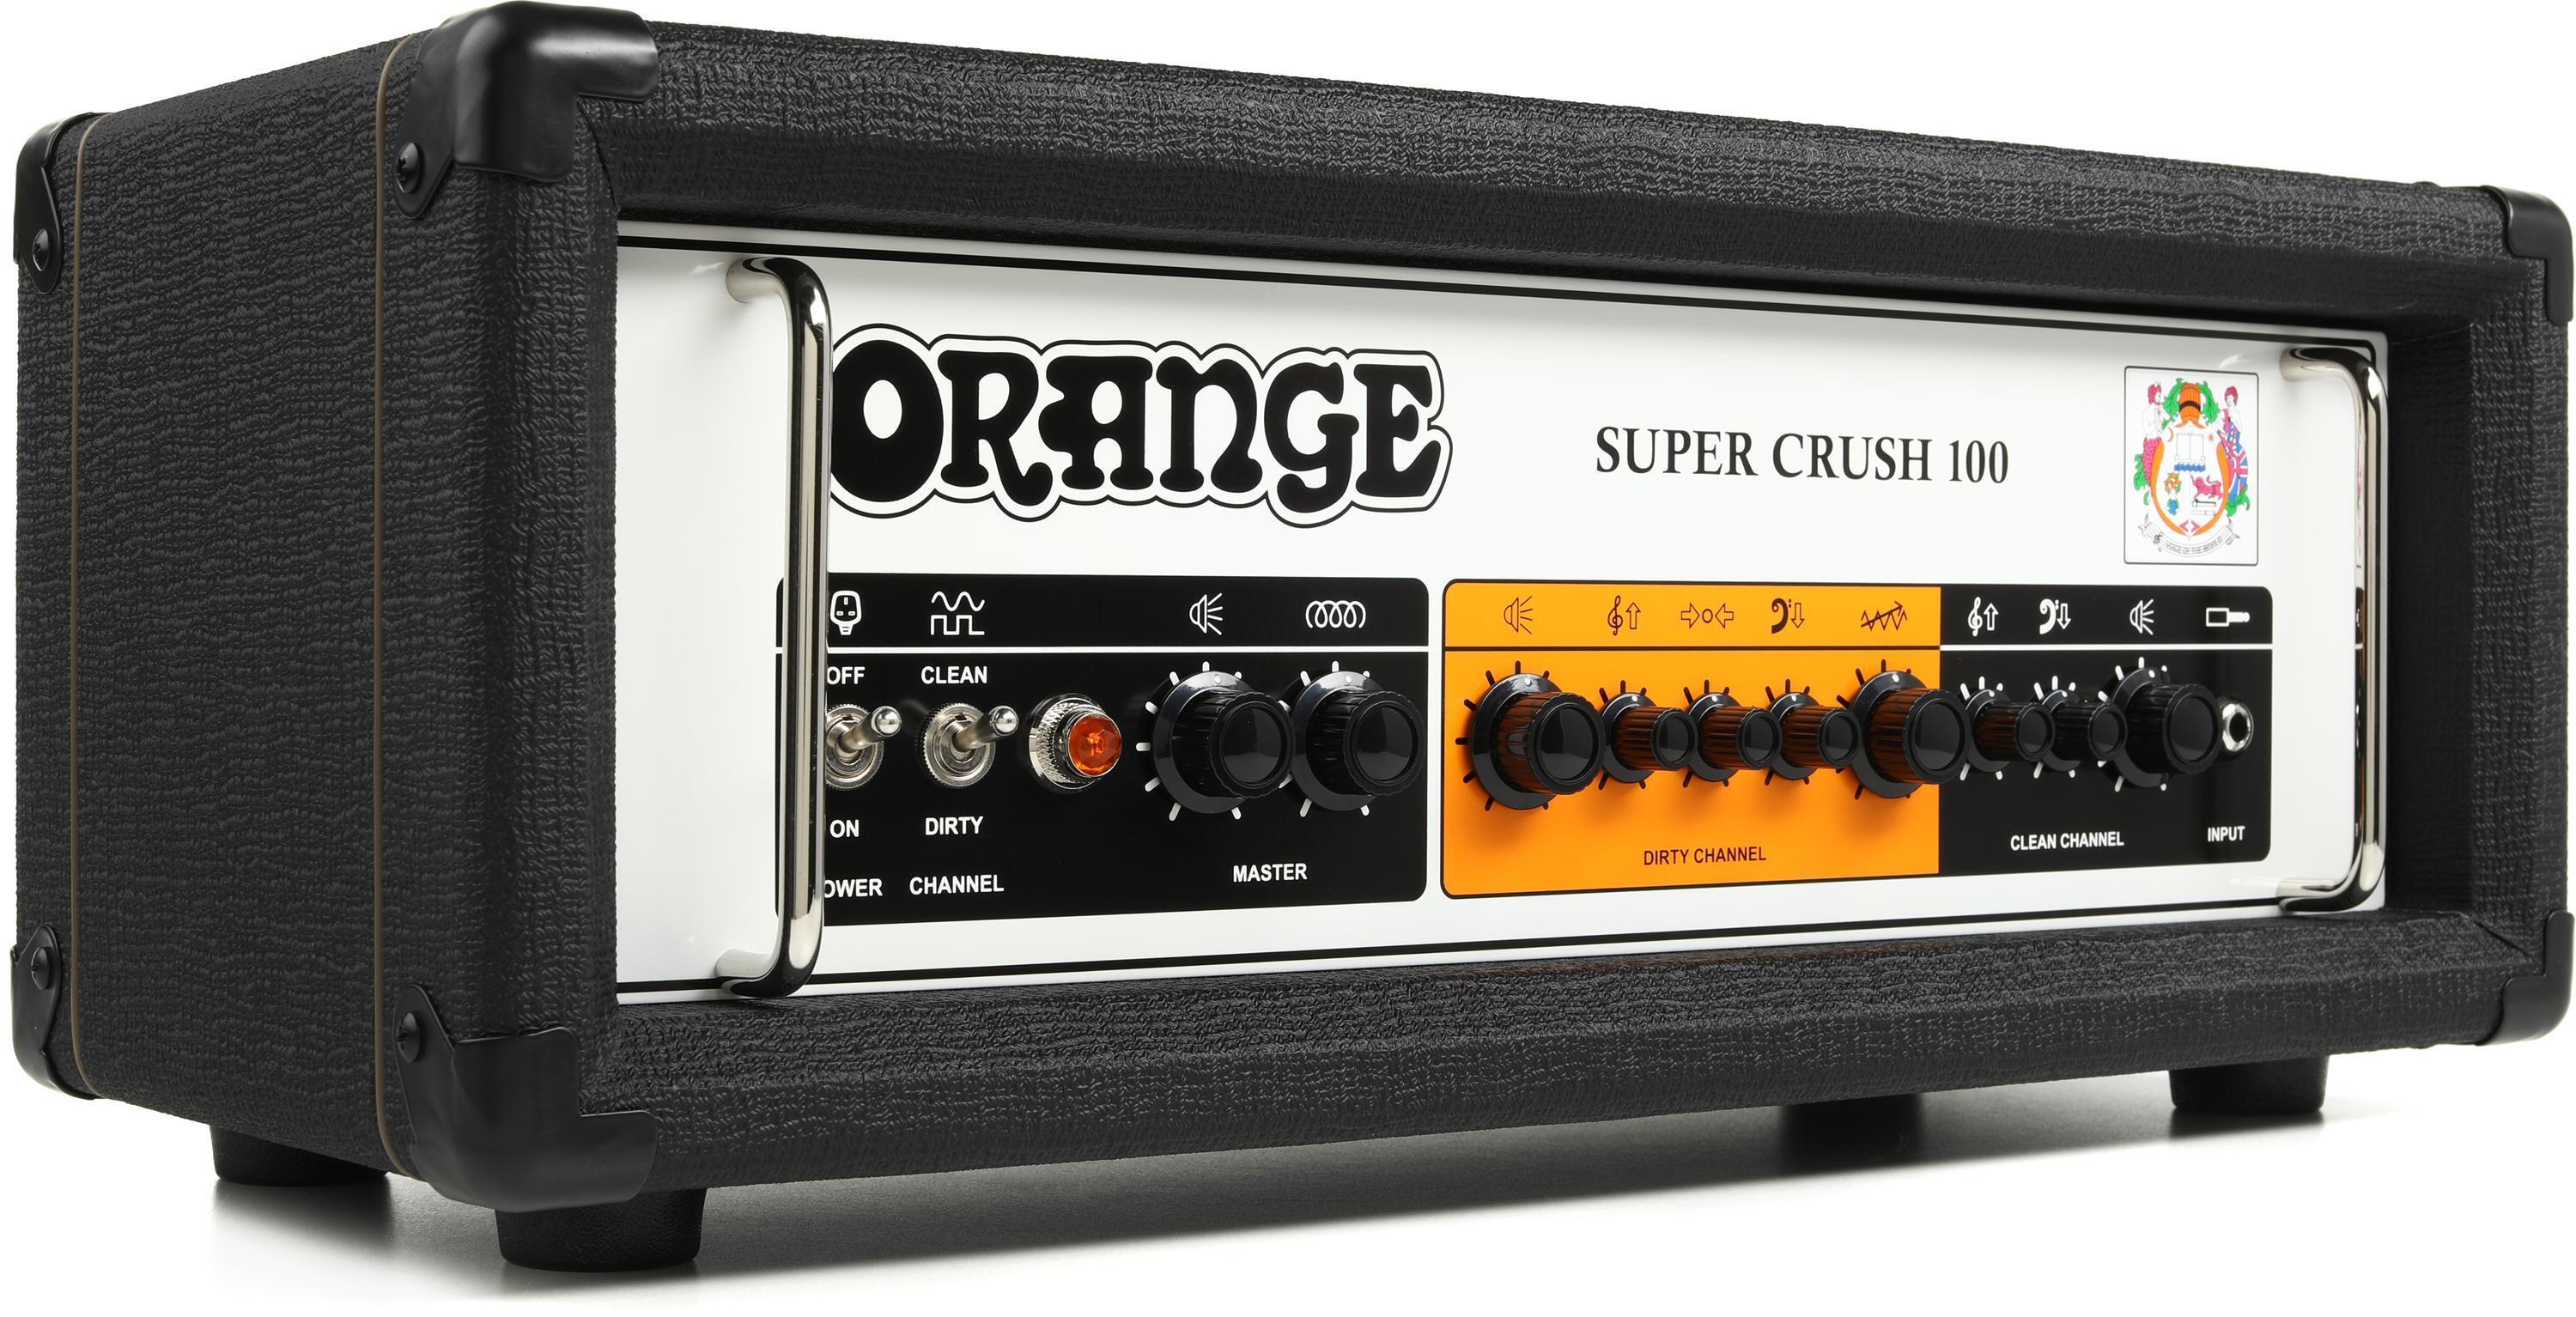 Orange Super Crush 100 - 100-watt Solid-state Head, Black